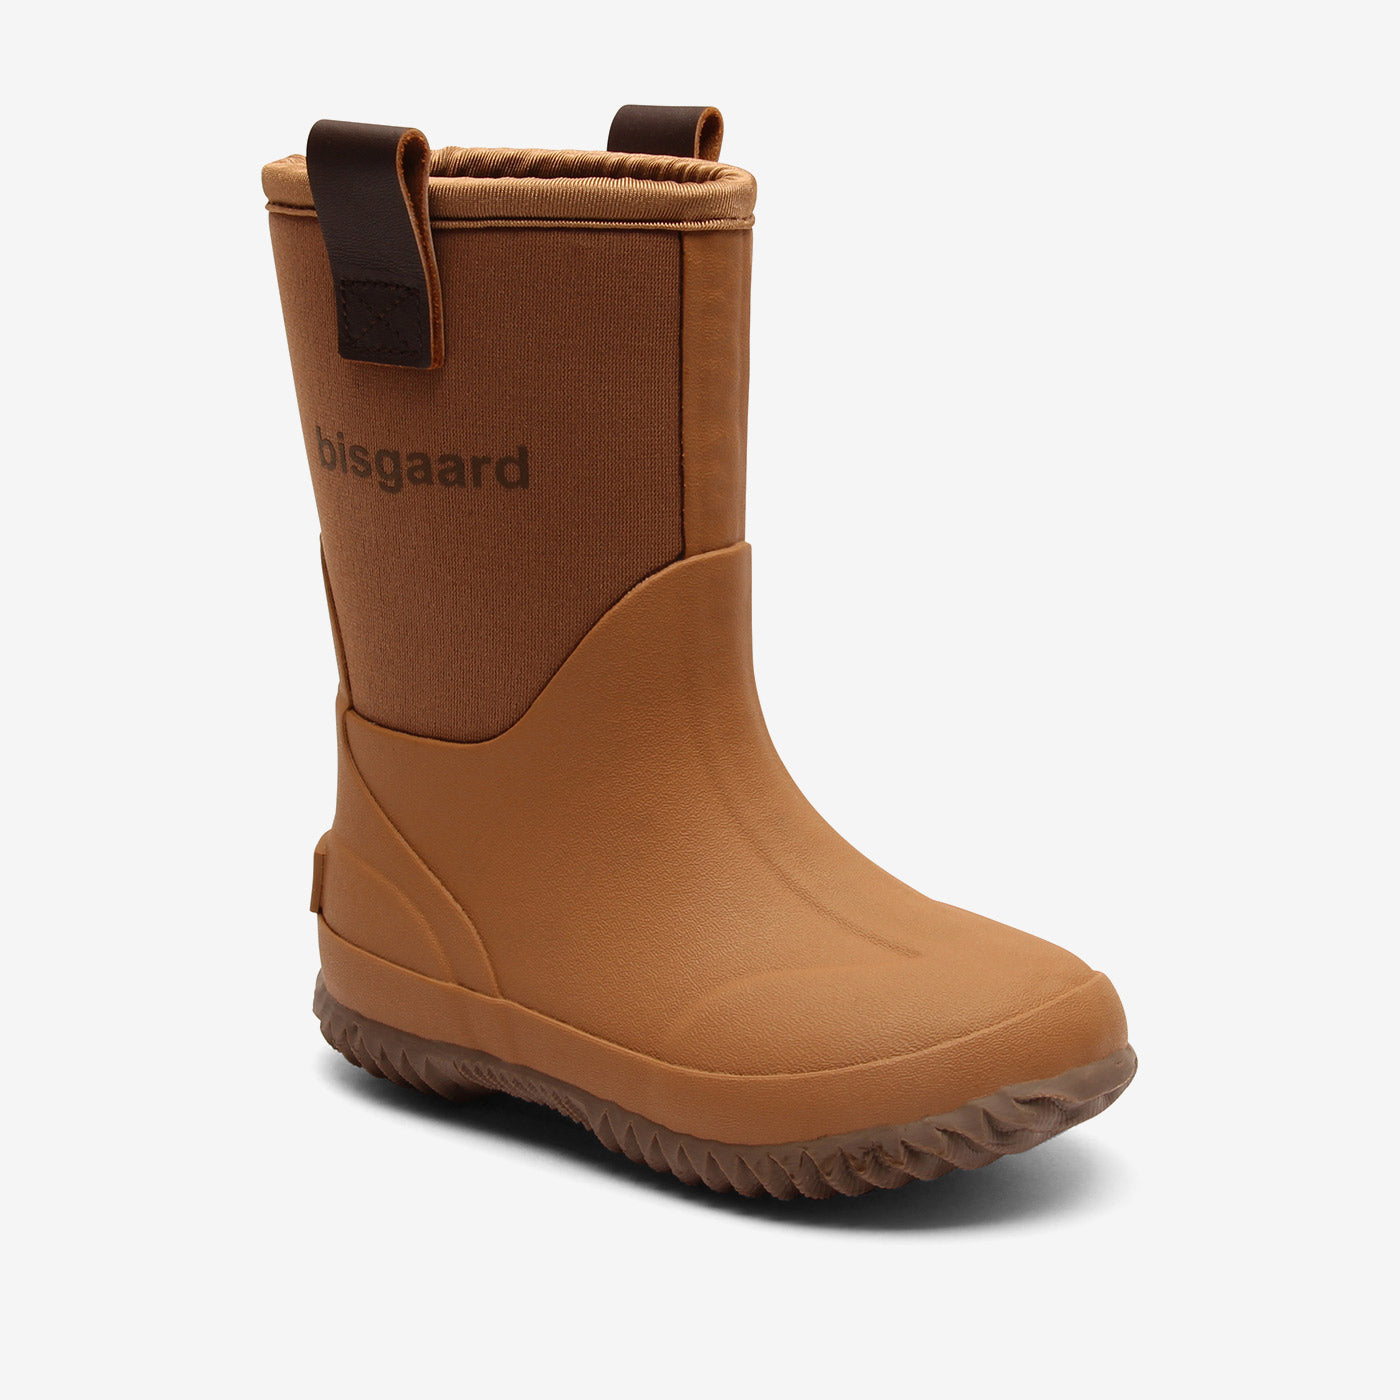 bisgaard neo thermo camel – Bisgaard shoes en | Stiefel